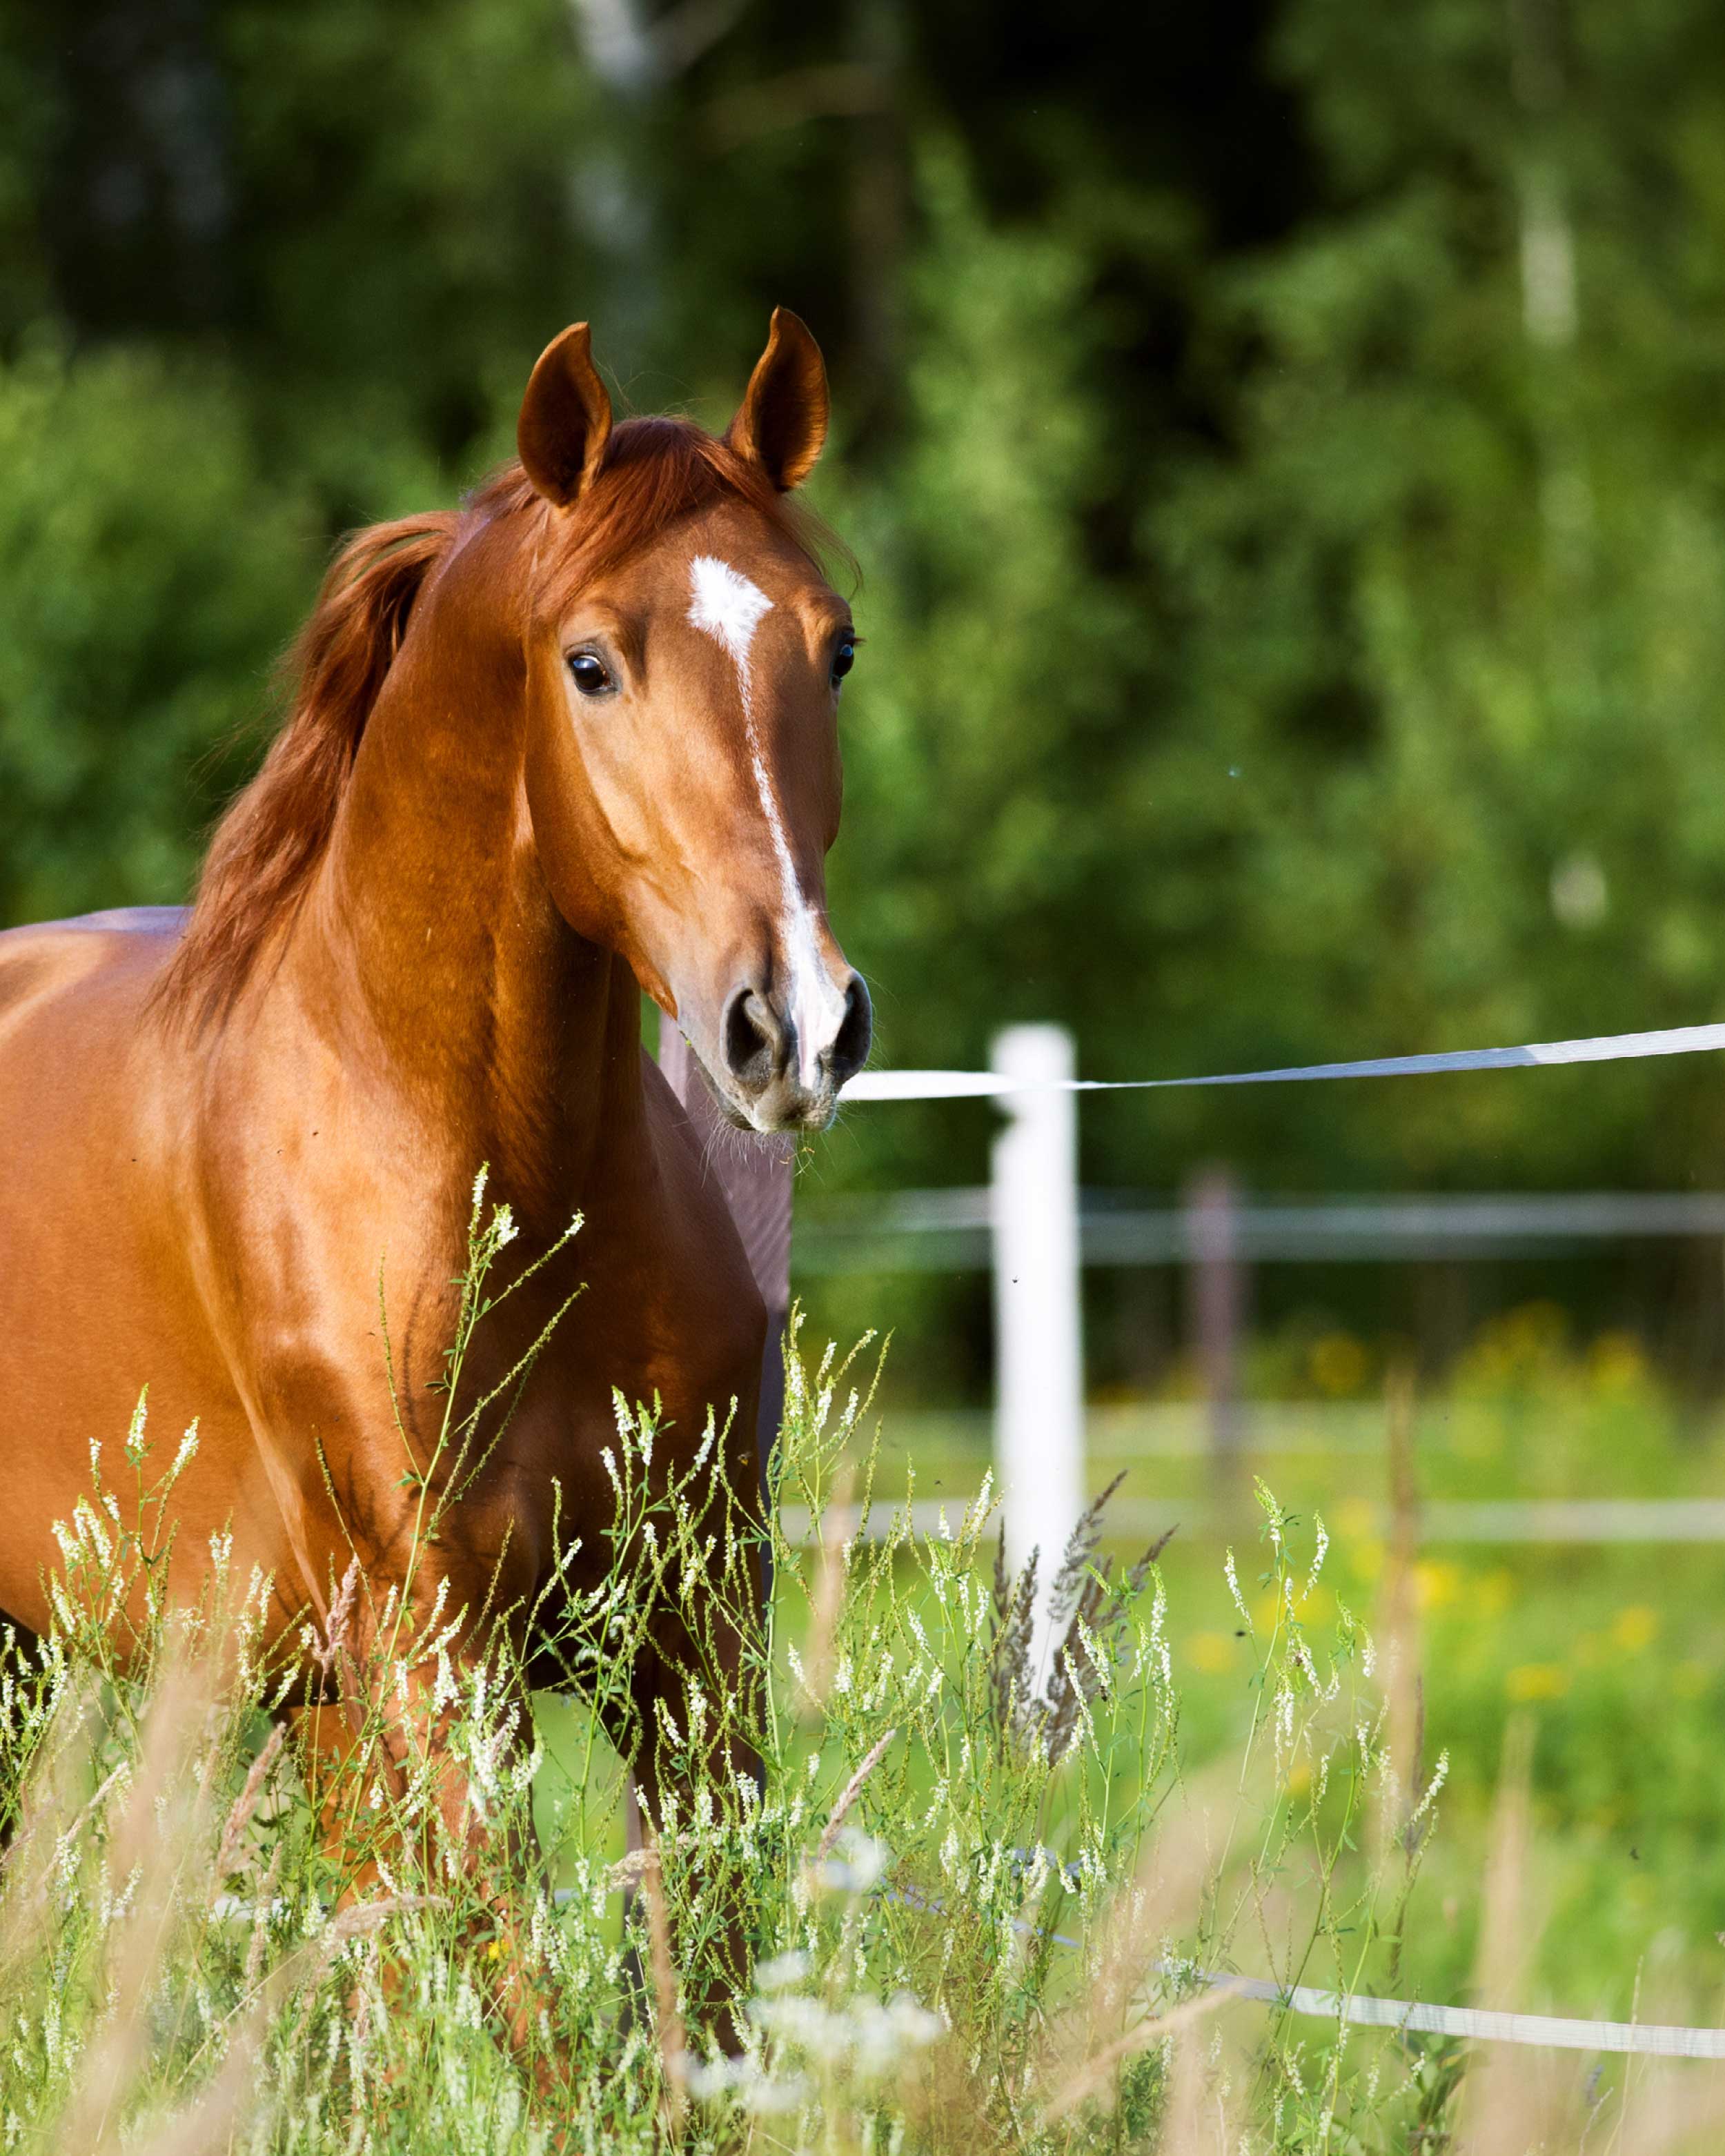 Equestrian sports & animal husbandry